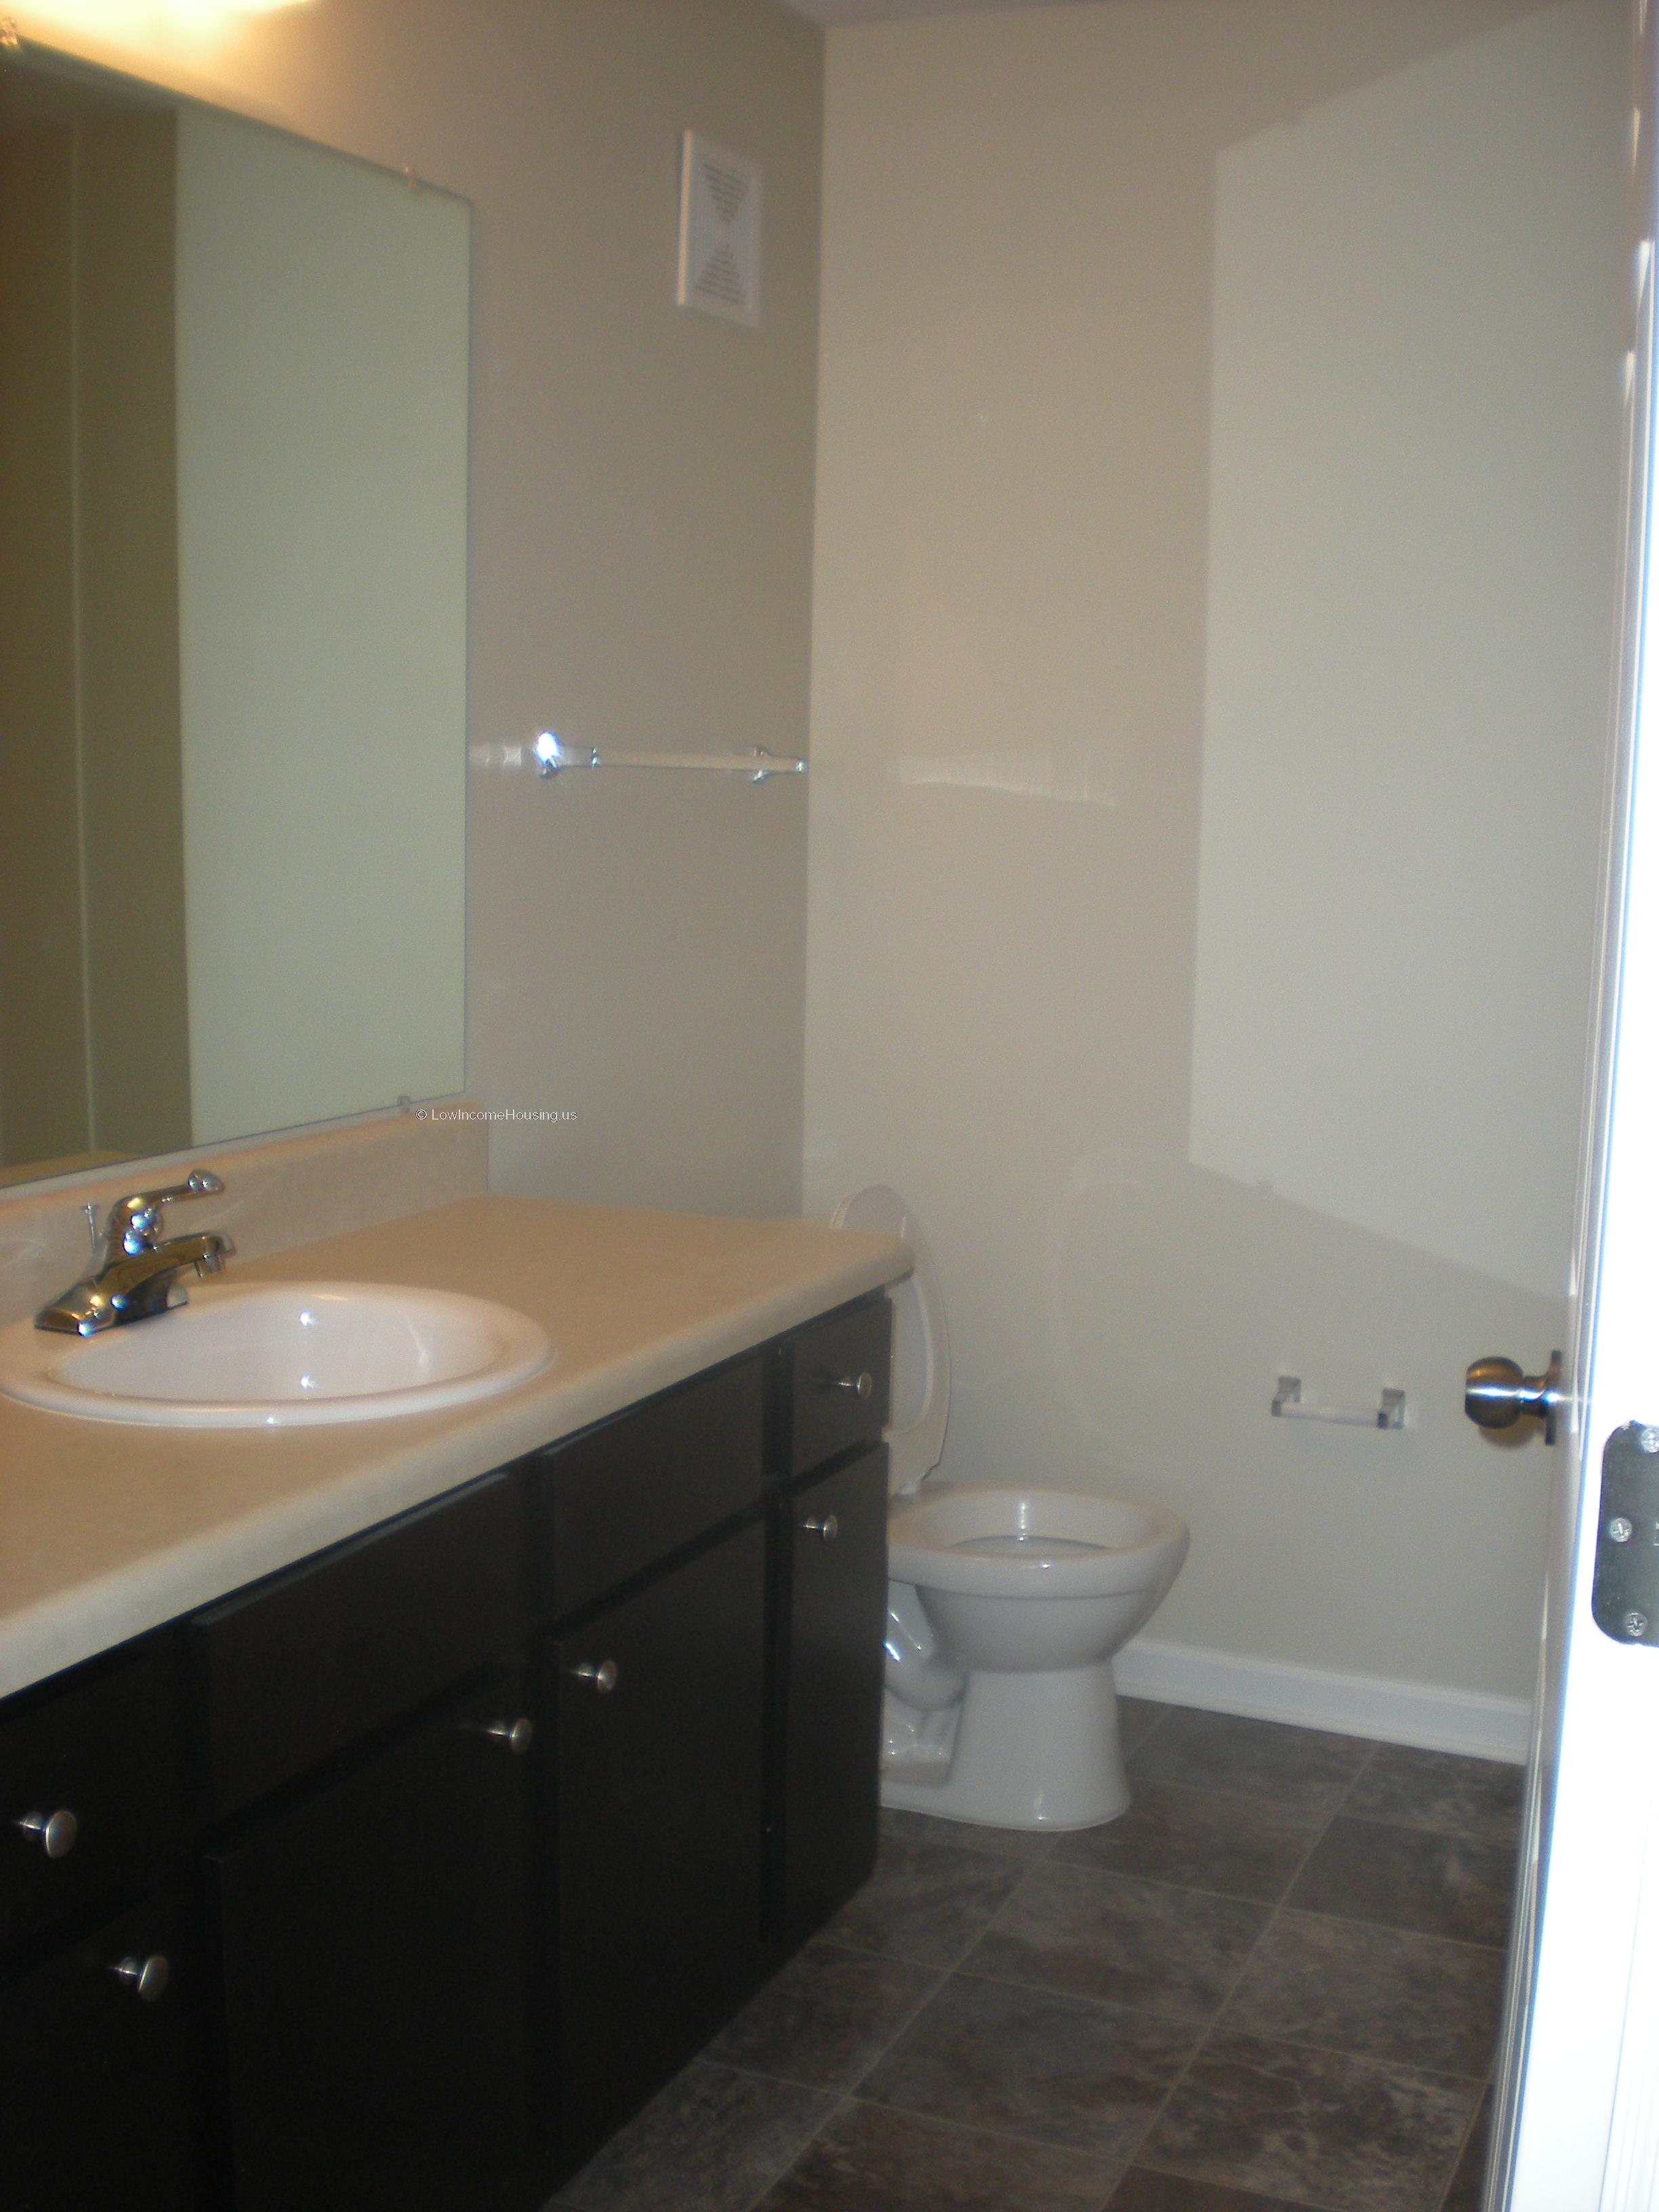 Interior of toilet facilities, sink, large mirror 